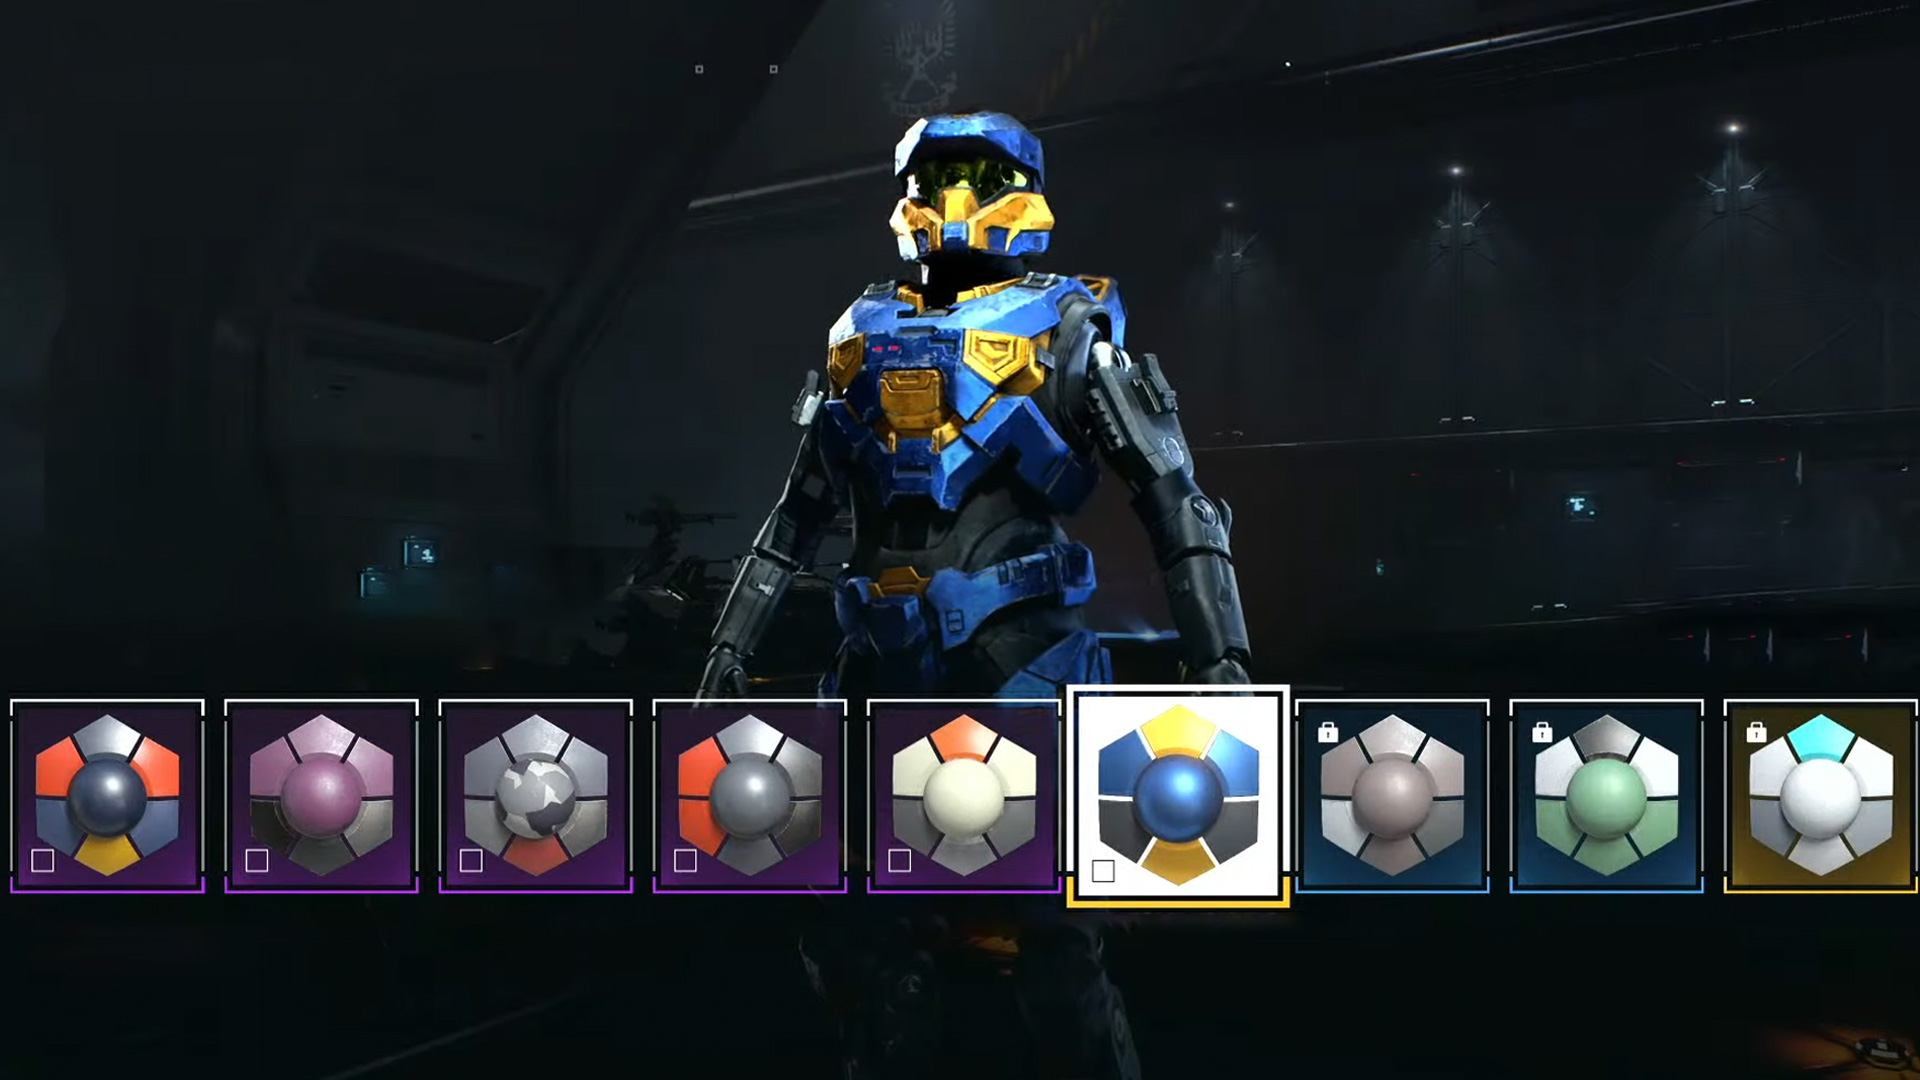 Halo Infinite Armor Customization